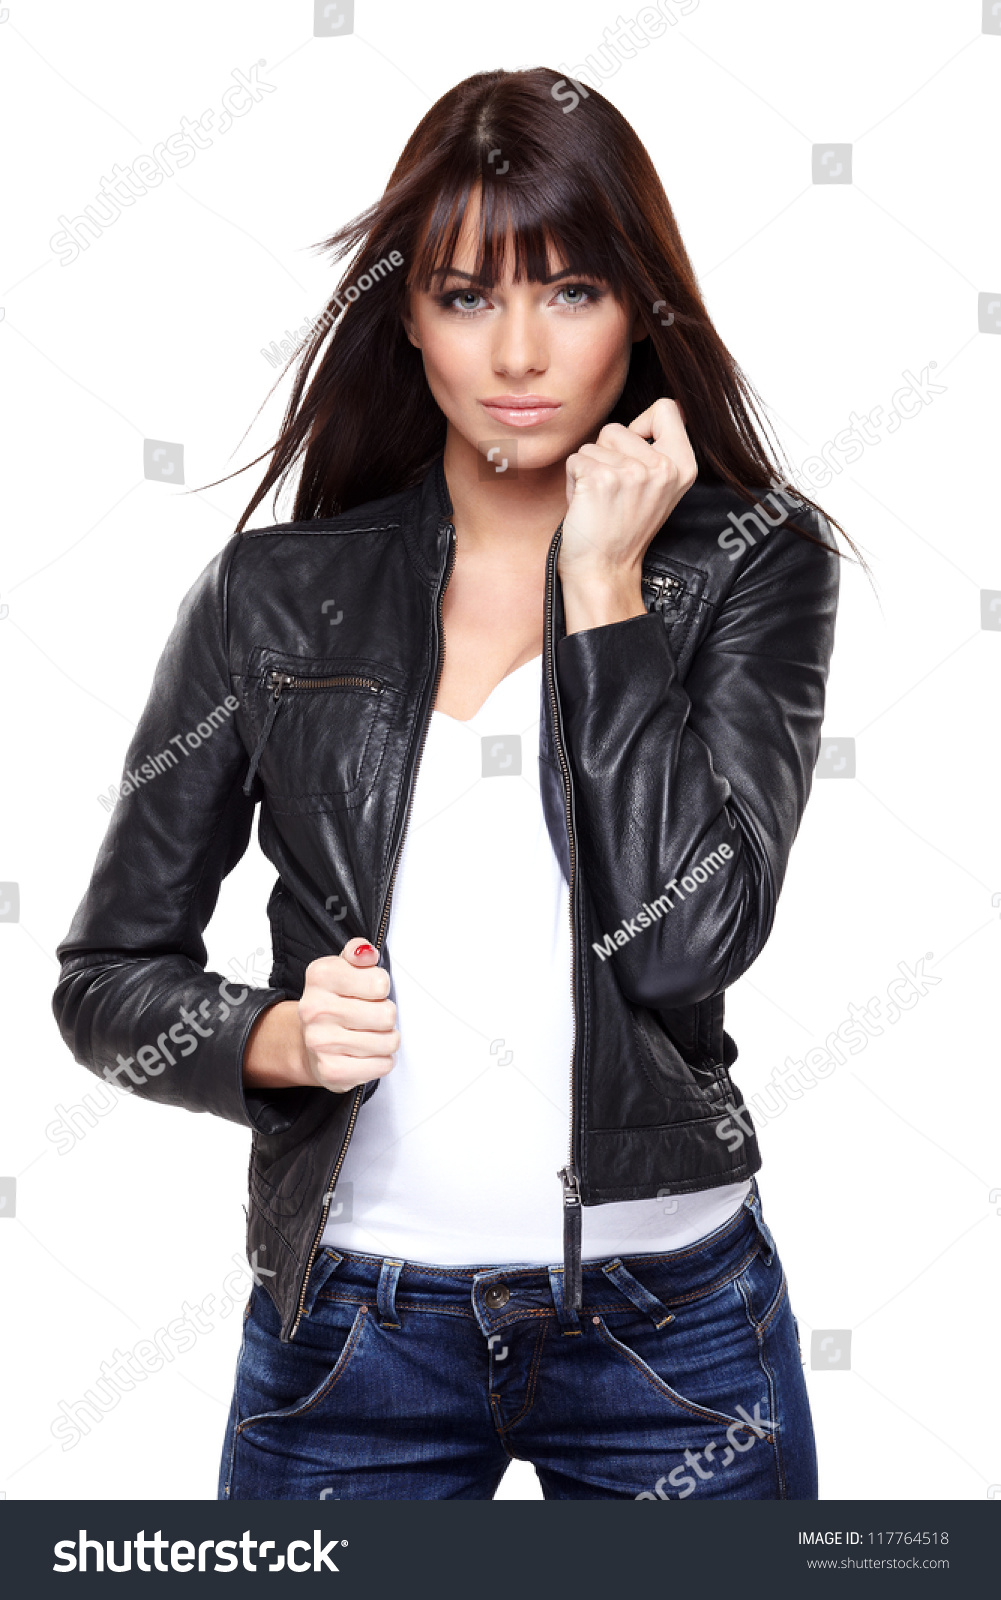 Glamorous Young Woman Black Leather Jacket Stock Photo 117764518